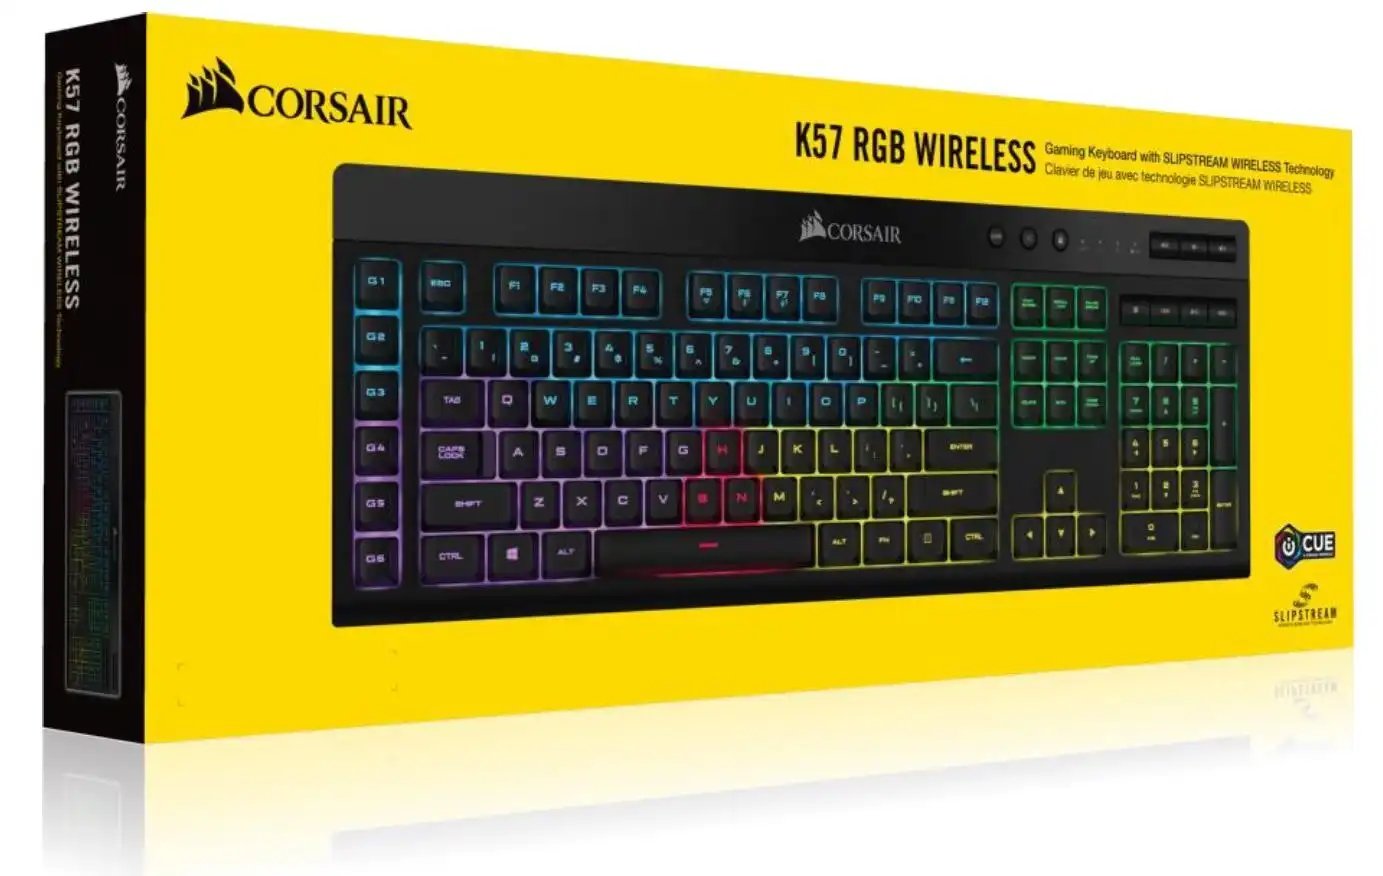 Corsair K57 RGB Wireless Gaming Keyboard w/ Slipstream Technology for Desktop PC